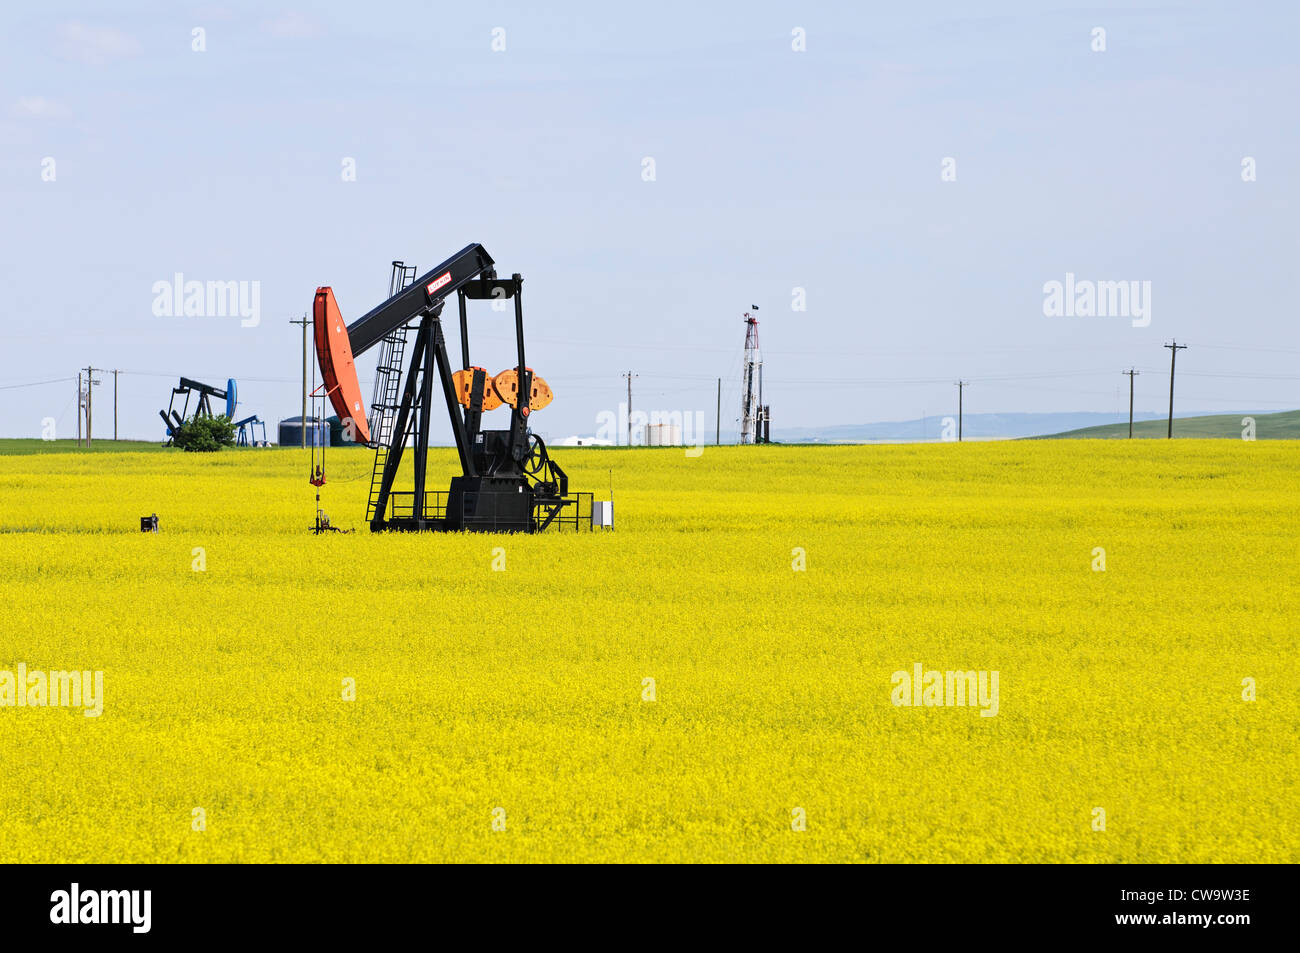 Oilfield pumpjacks in a farm field of flowering canola (rapeseed) pump crude oil near the town of Drumheller, Alberta, Canada. Stock Photo